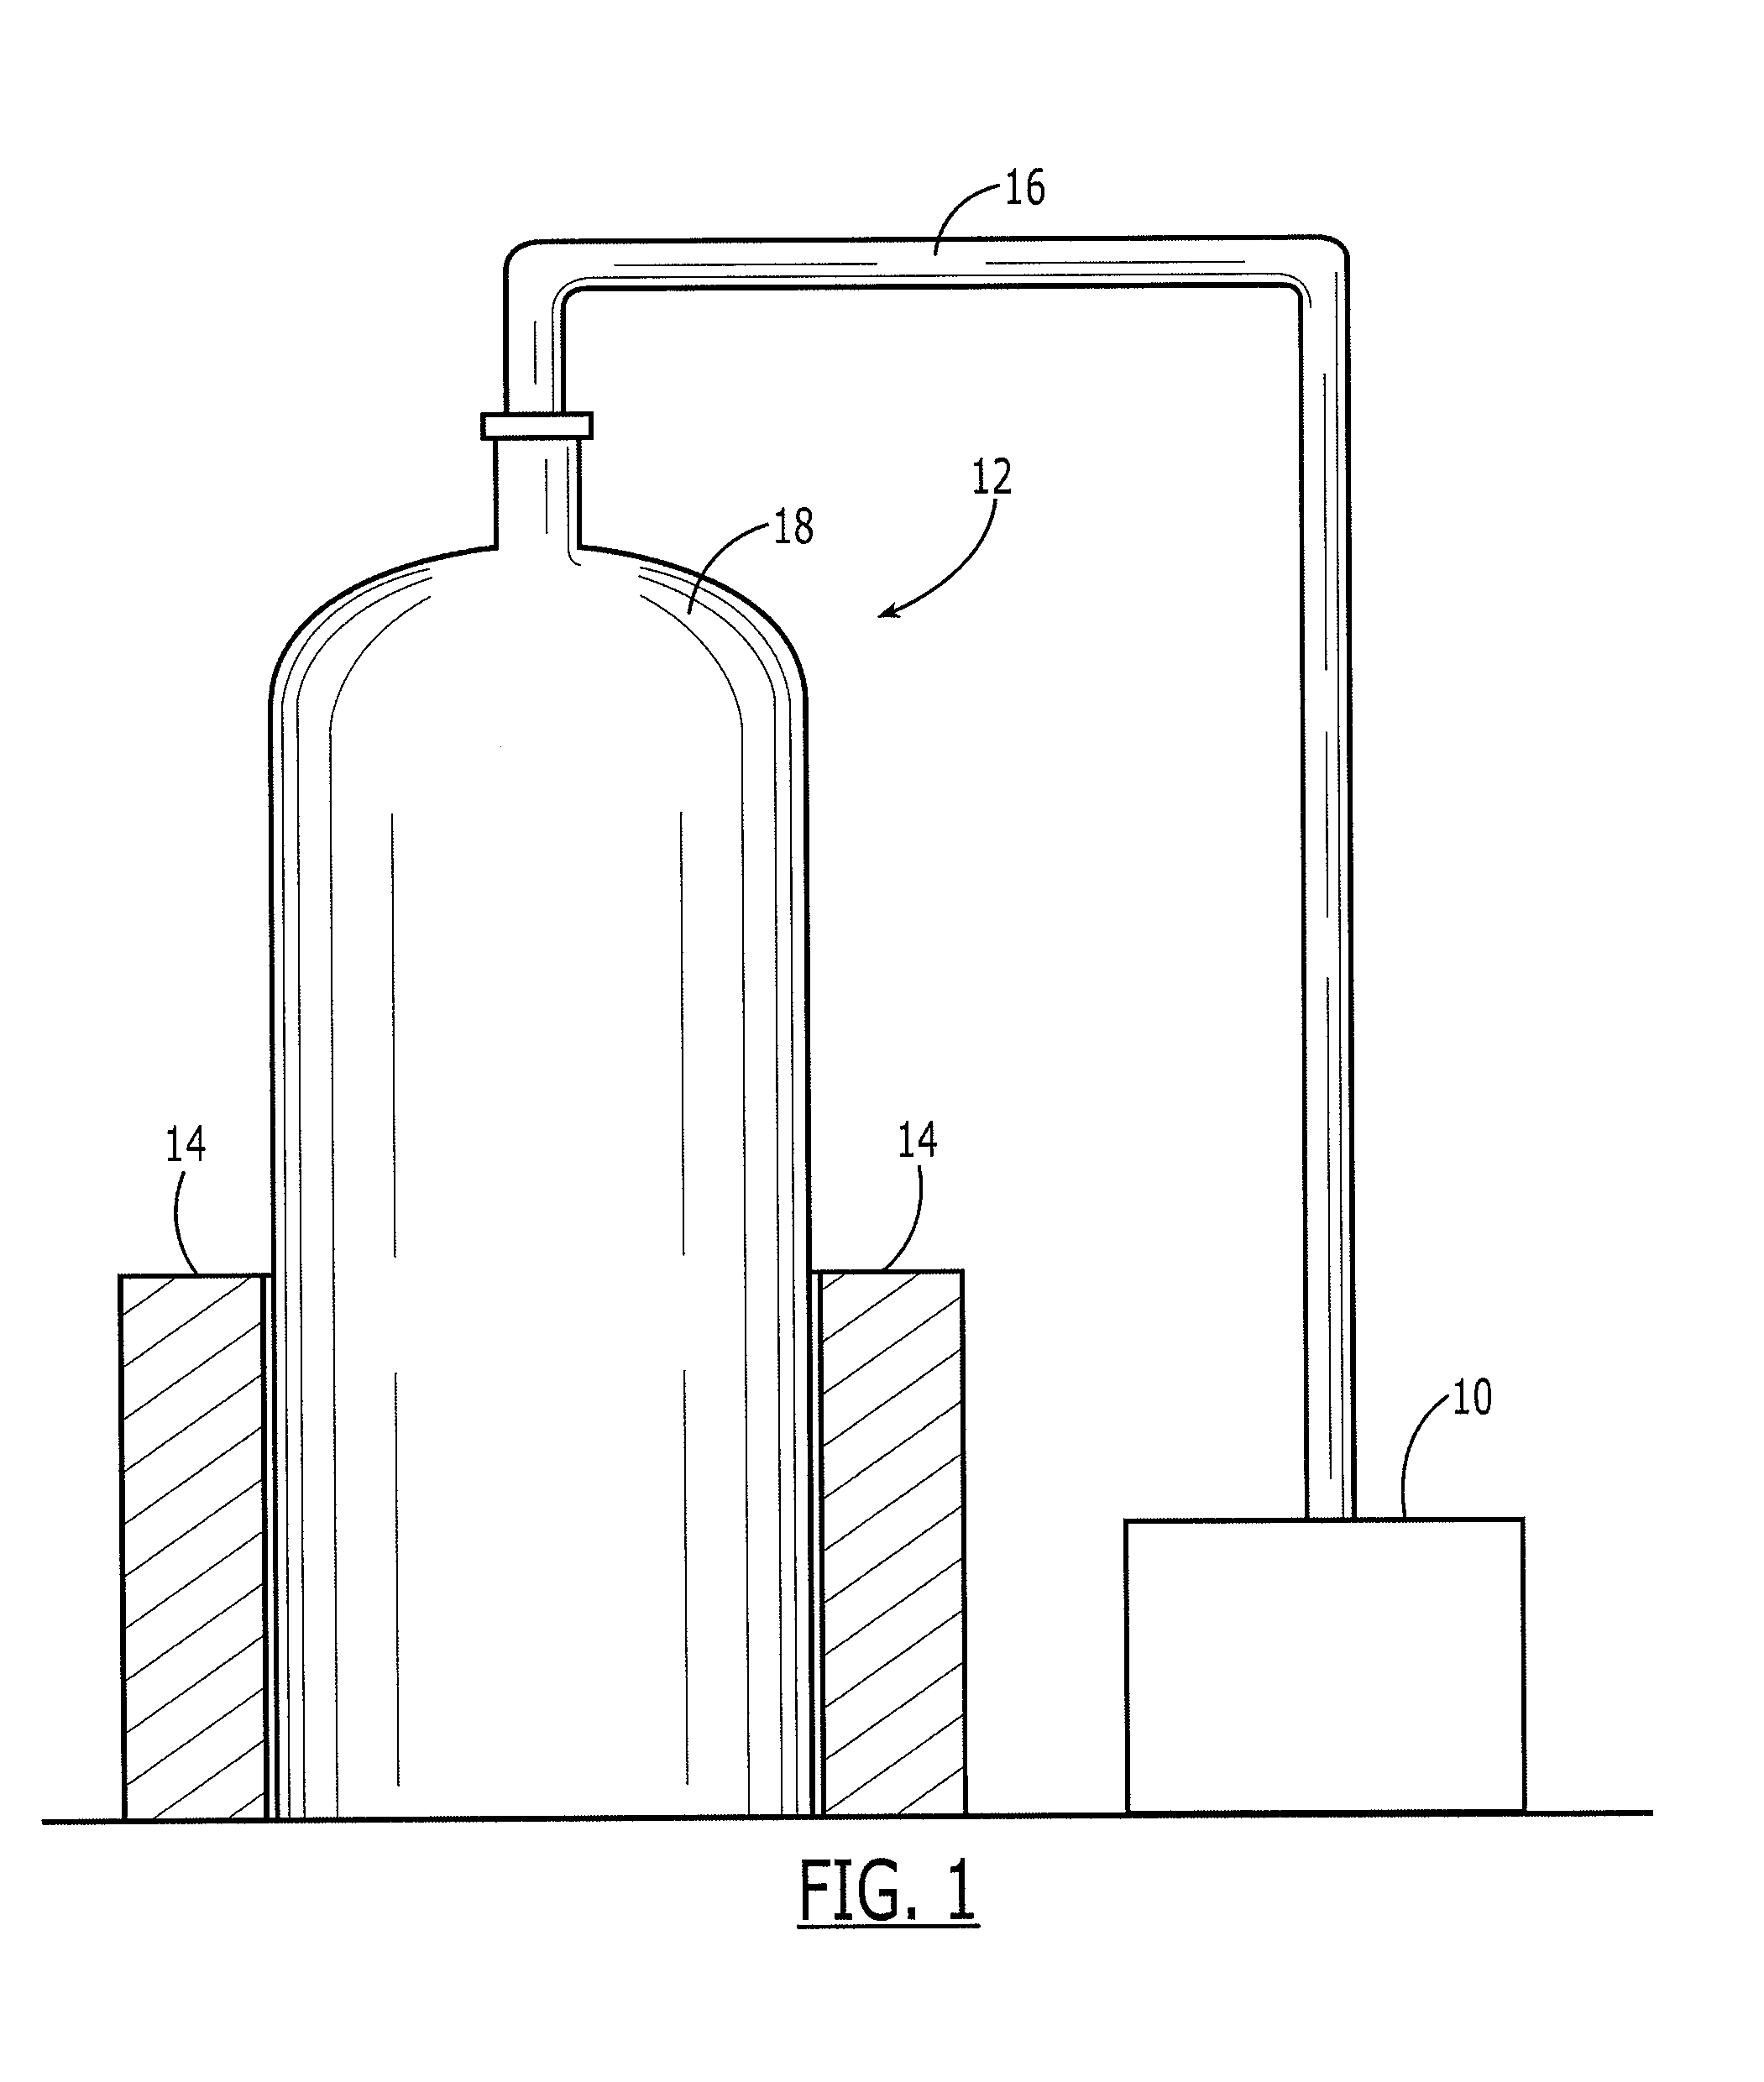 Method and apparatus for vaporizing liquid